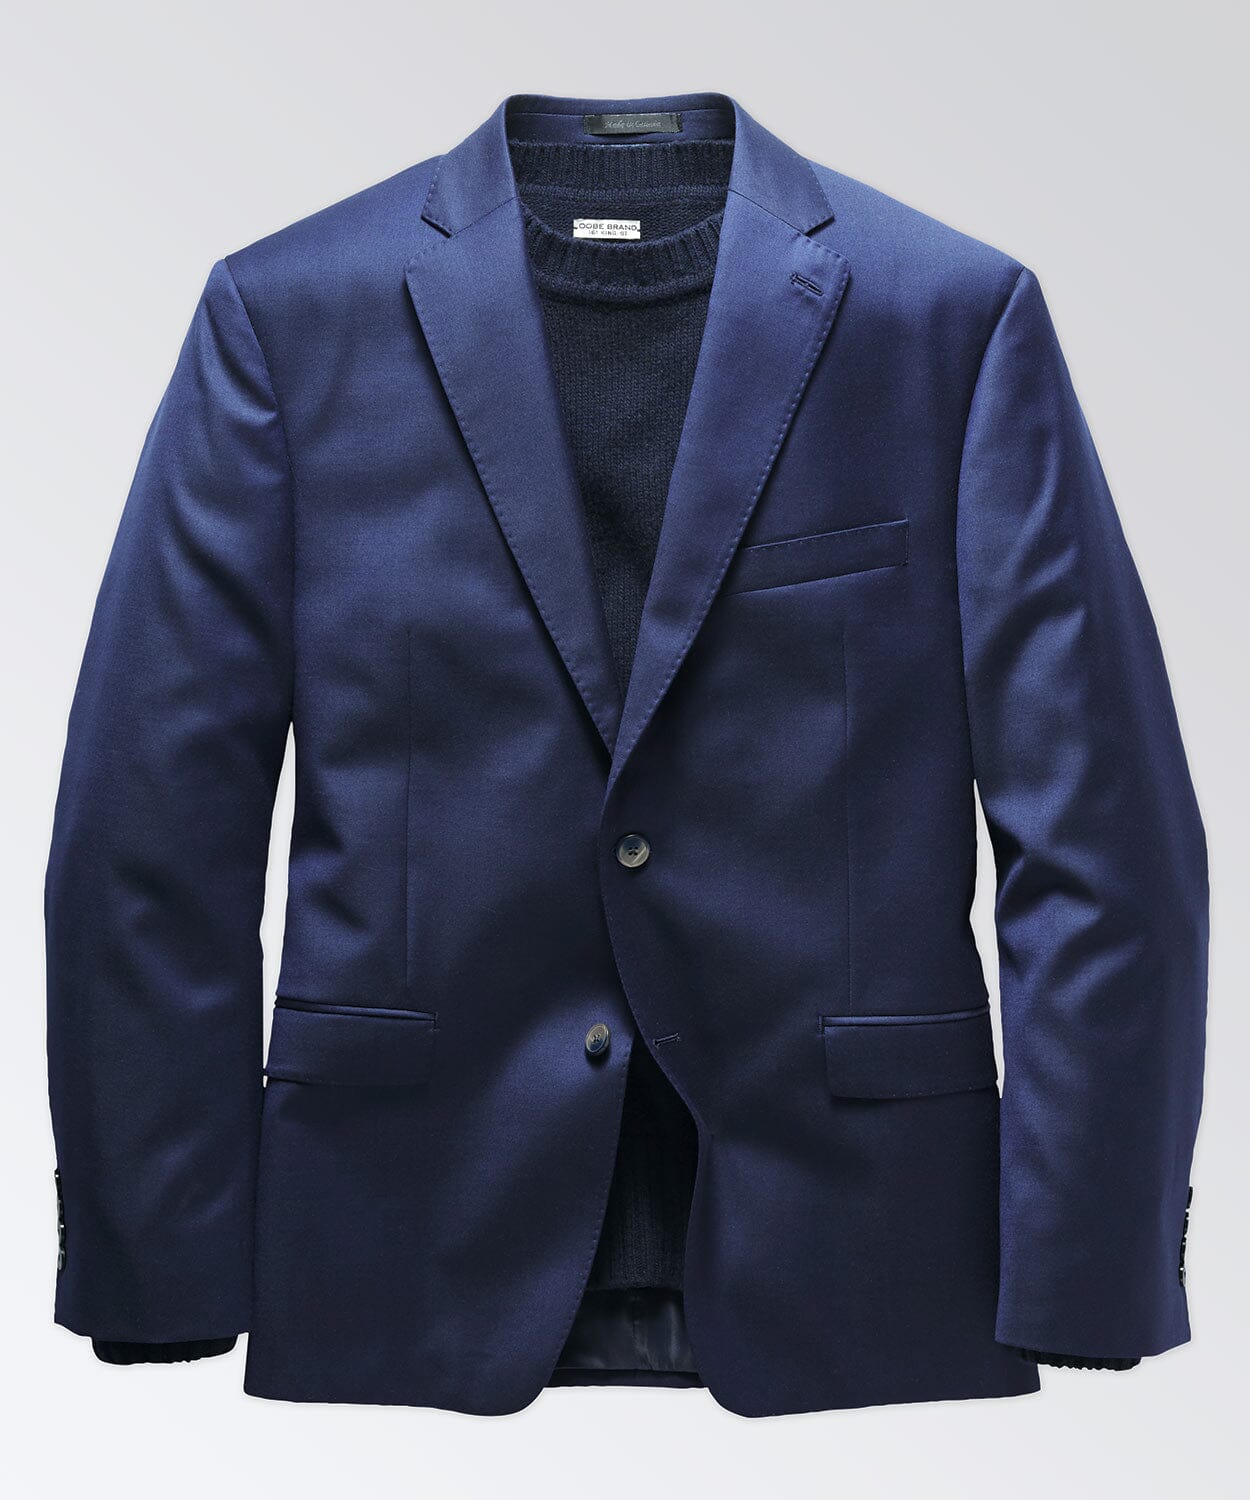 Styled image of navy wool blazer